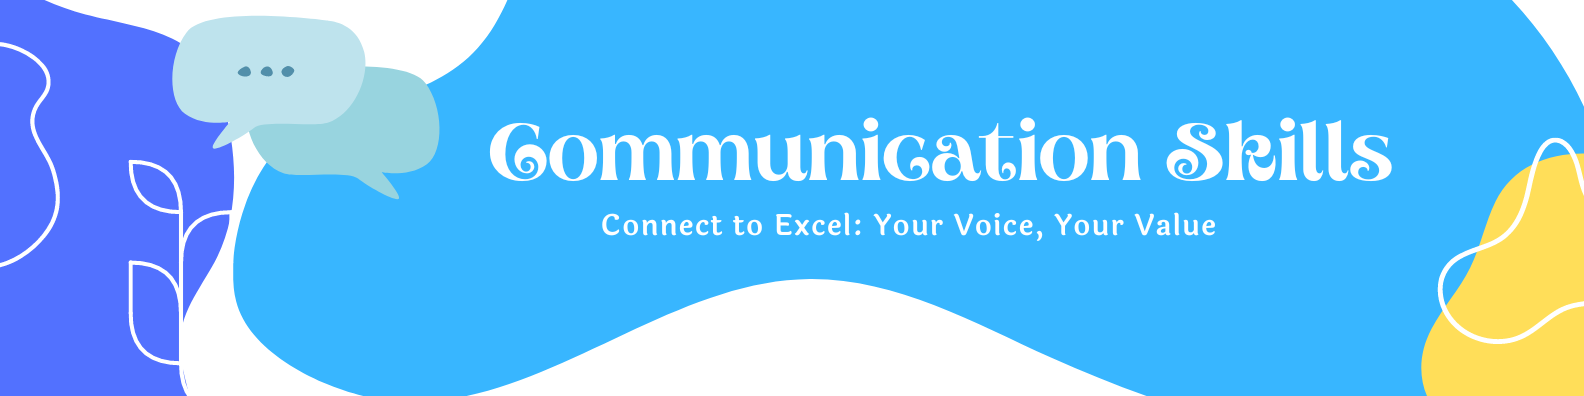 communication skills banner 